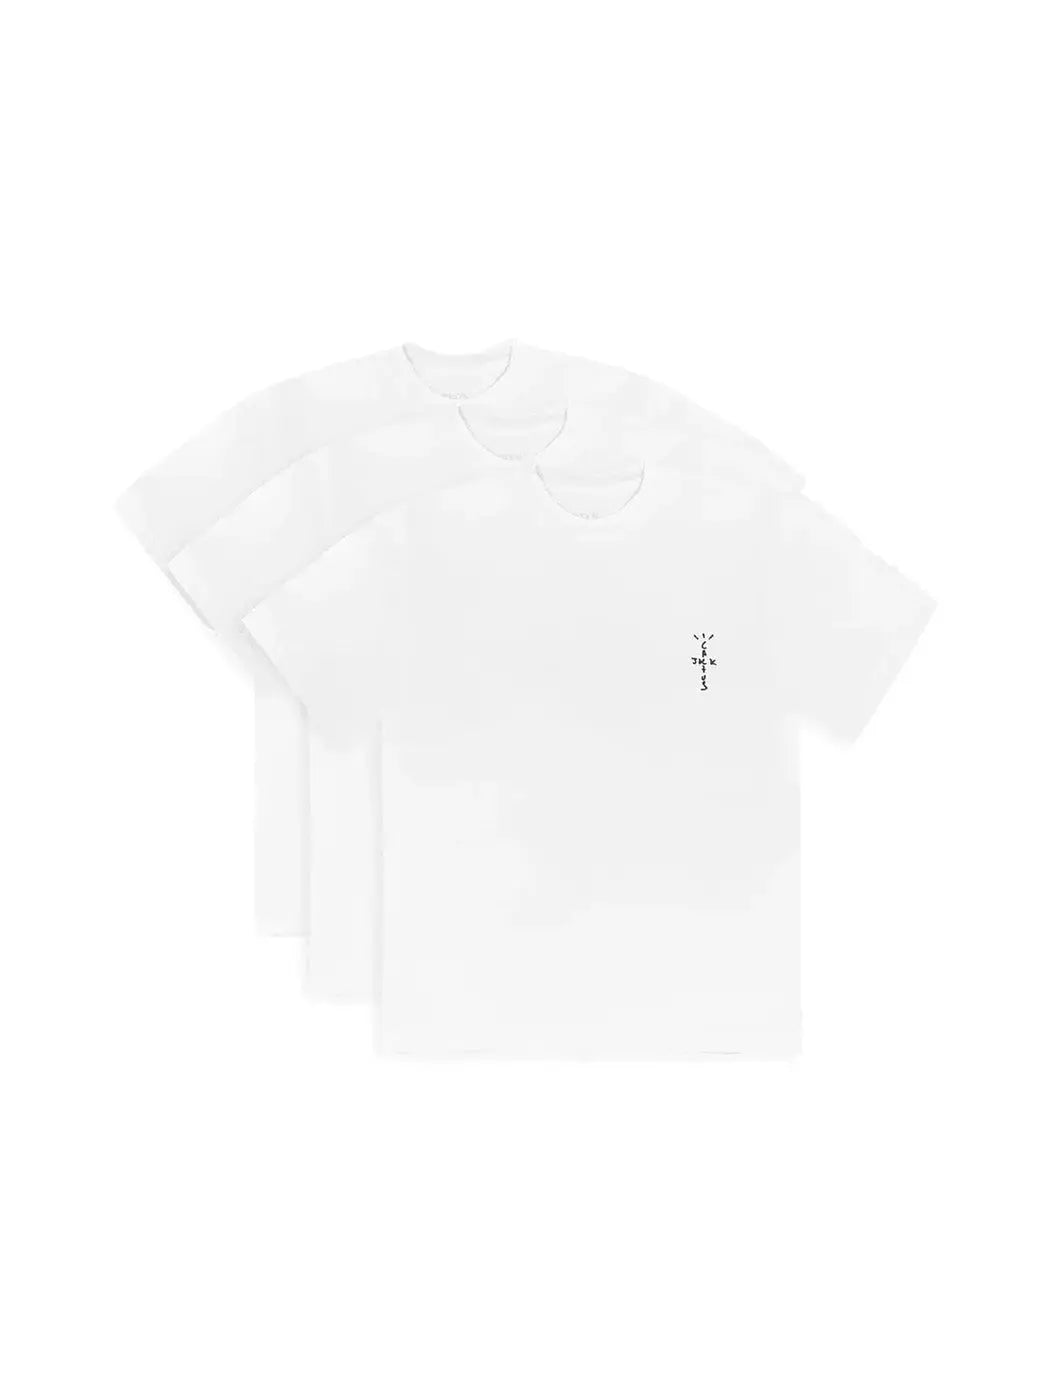 Travis Scott CJ T-Shirt (3 Pack) White in Auckland, New Zealand - Shop name